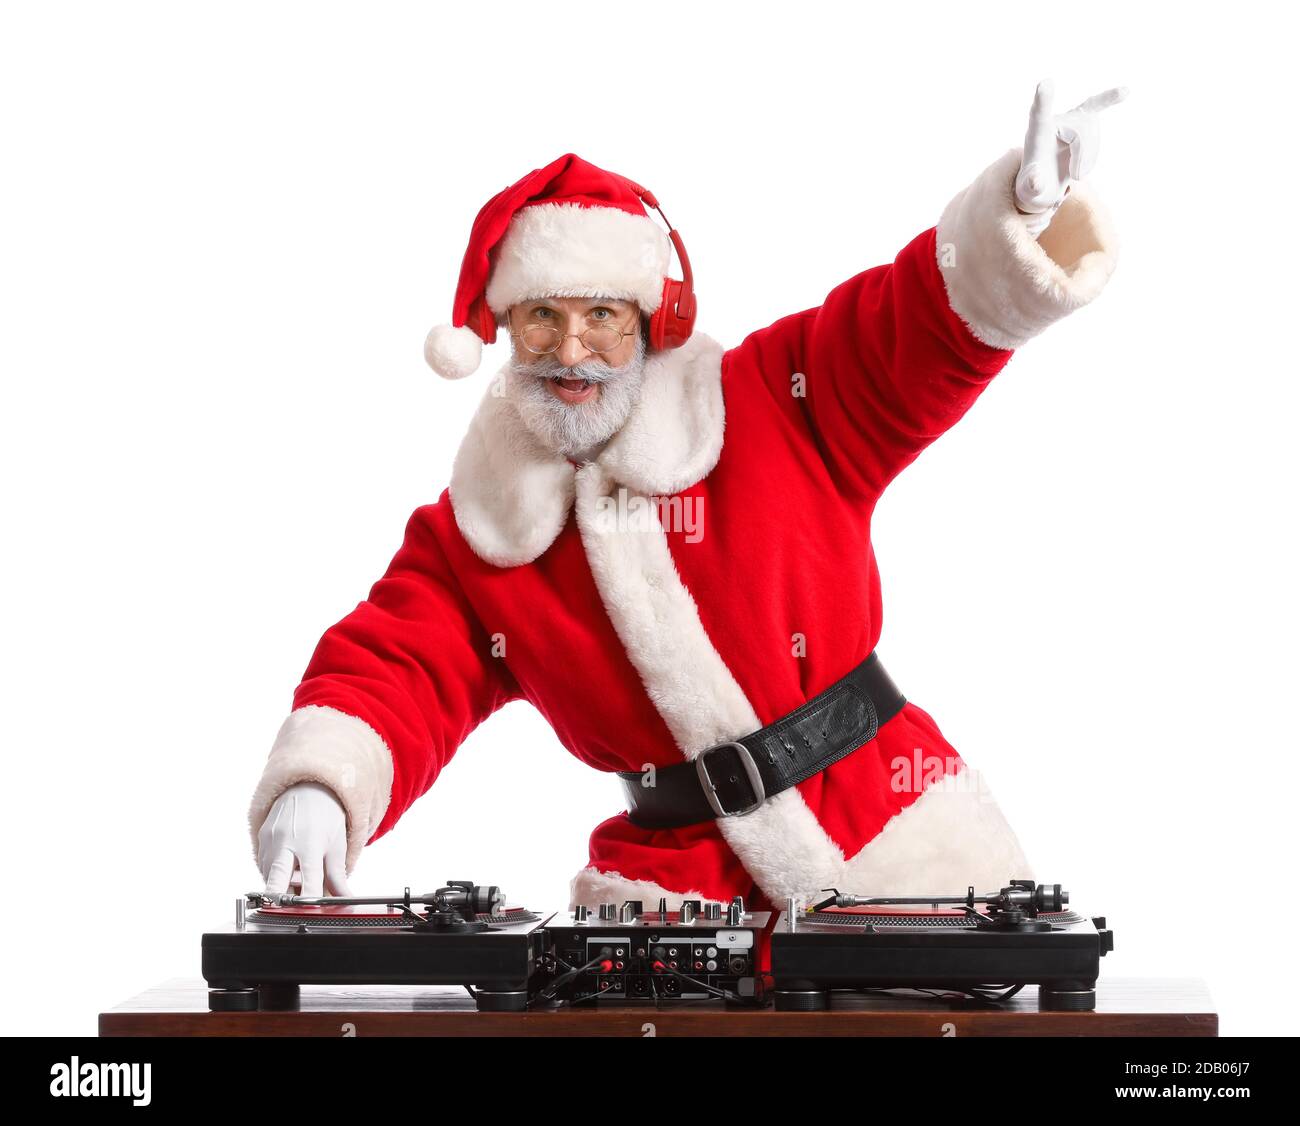 Cool Santa DJ playing music on white background Stock Photo - Alamy